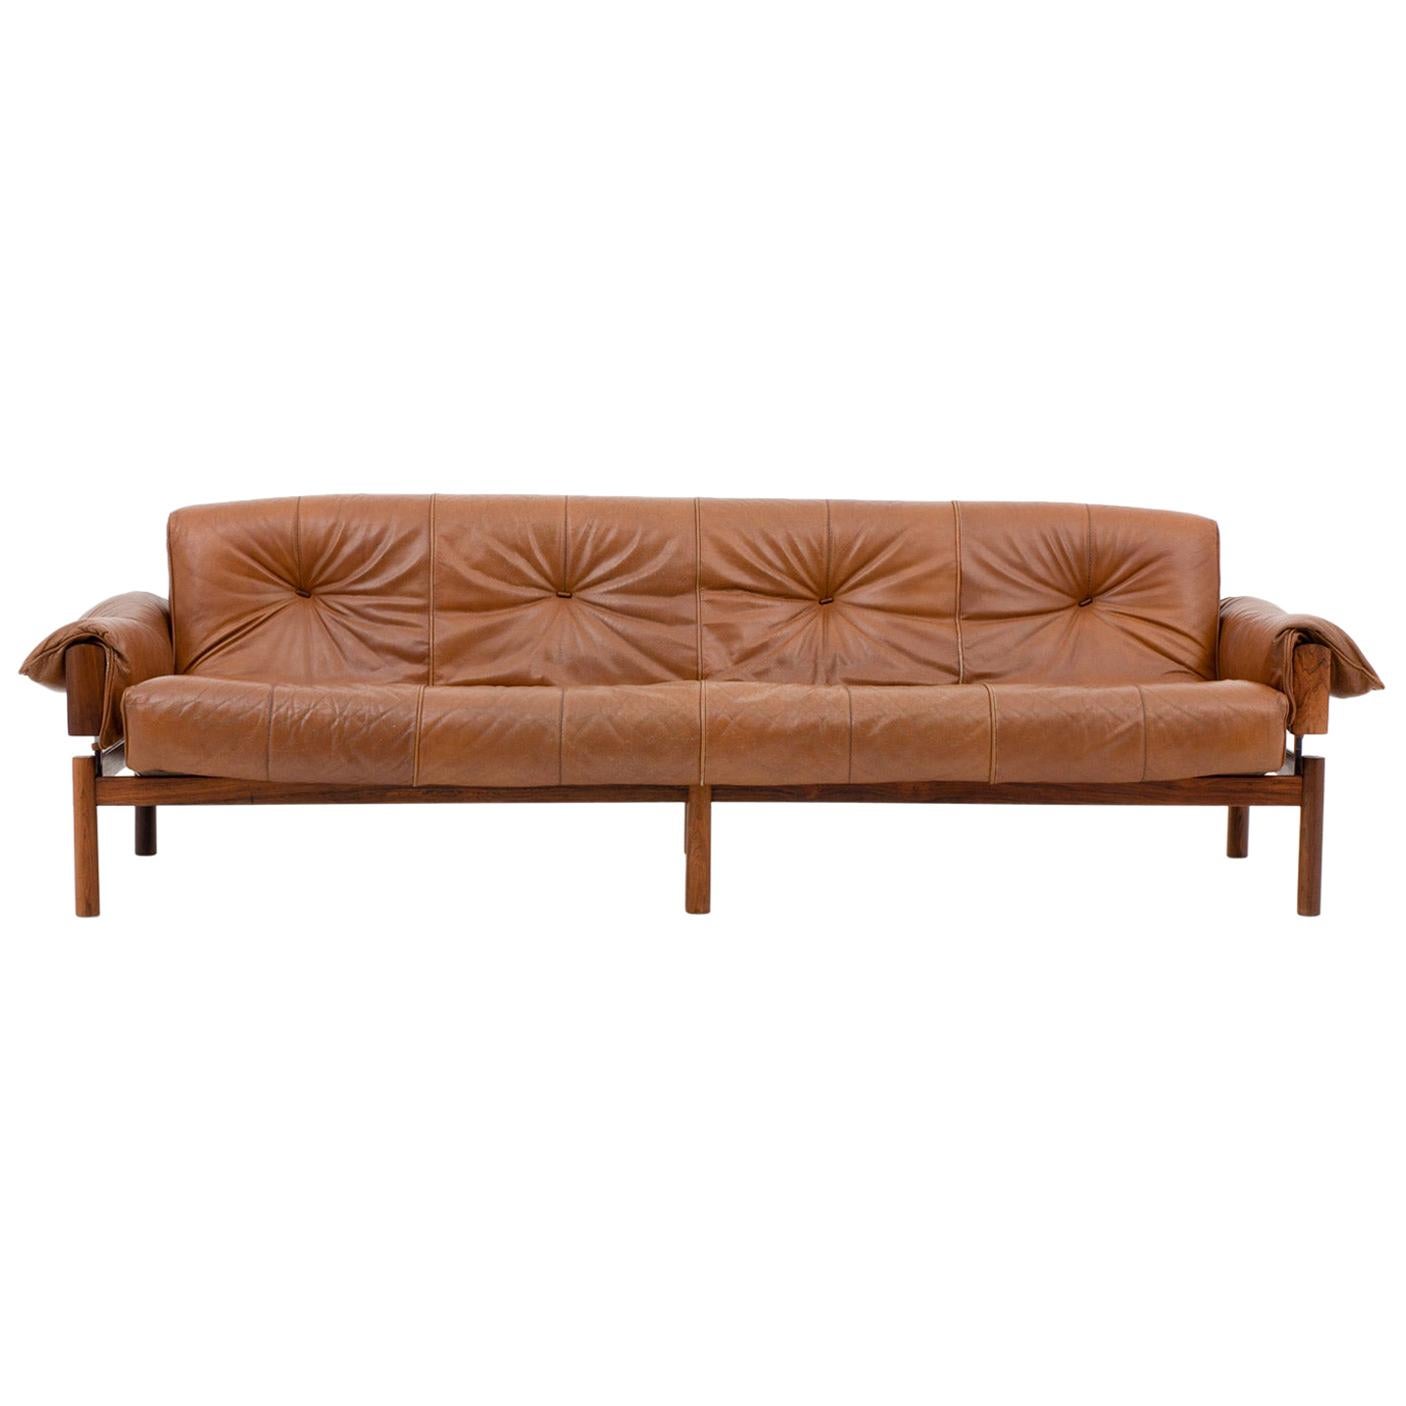 Brazilian Rosewood Sofa - 100 For Sale on 1stDibs